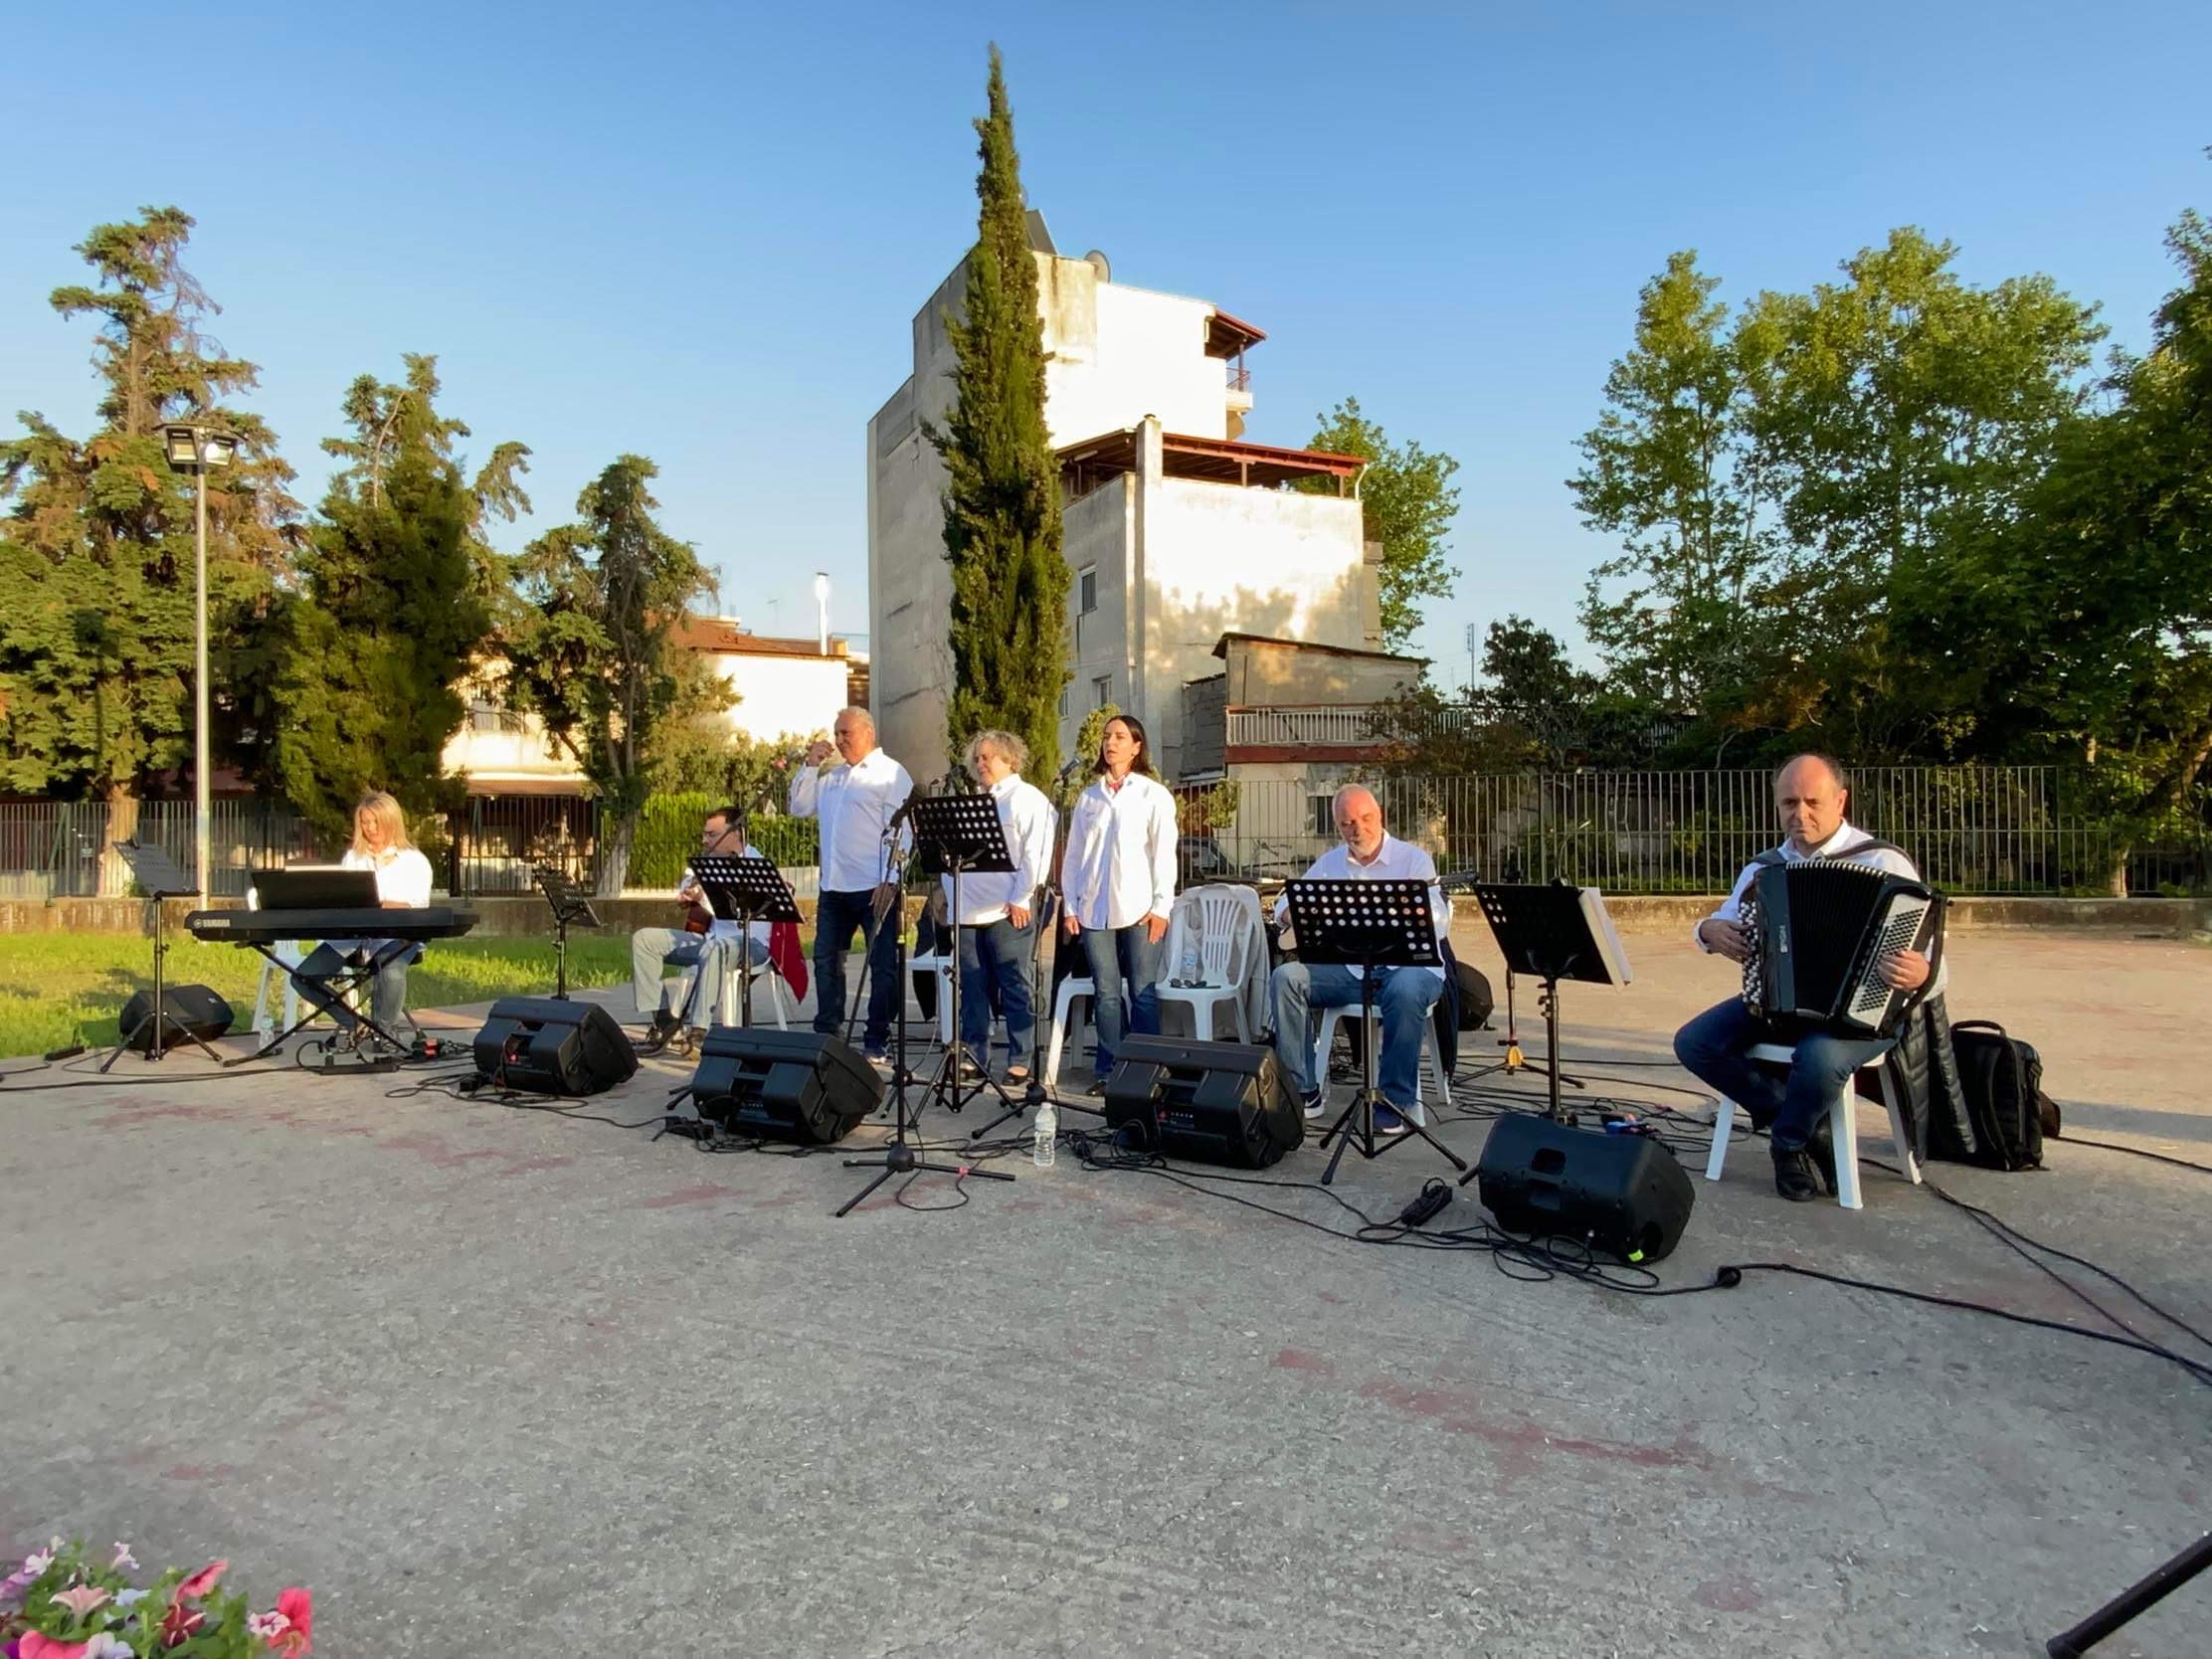 H Pfizer Hellas Band ξανά κοντά στην τρίτη ηλικία με μεγάλη συναυλία  στο Δήμο Δέλτα της Θεσσαλονίκης